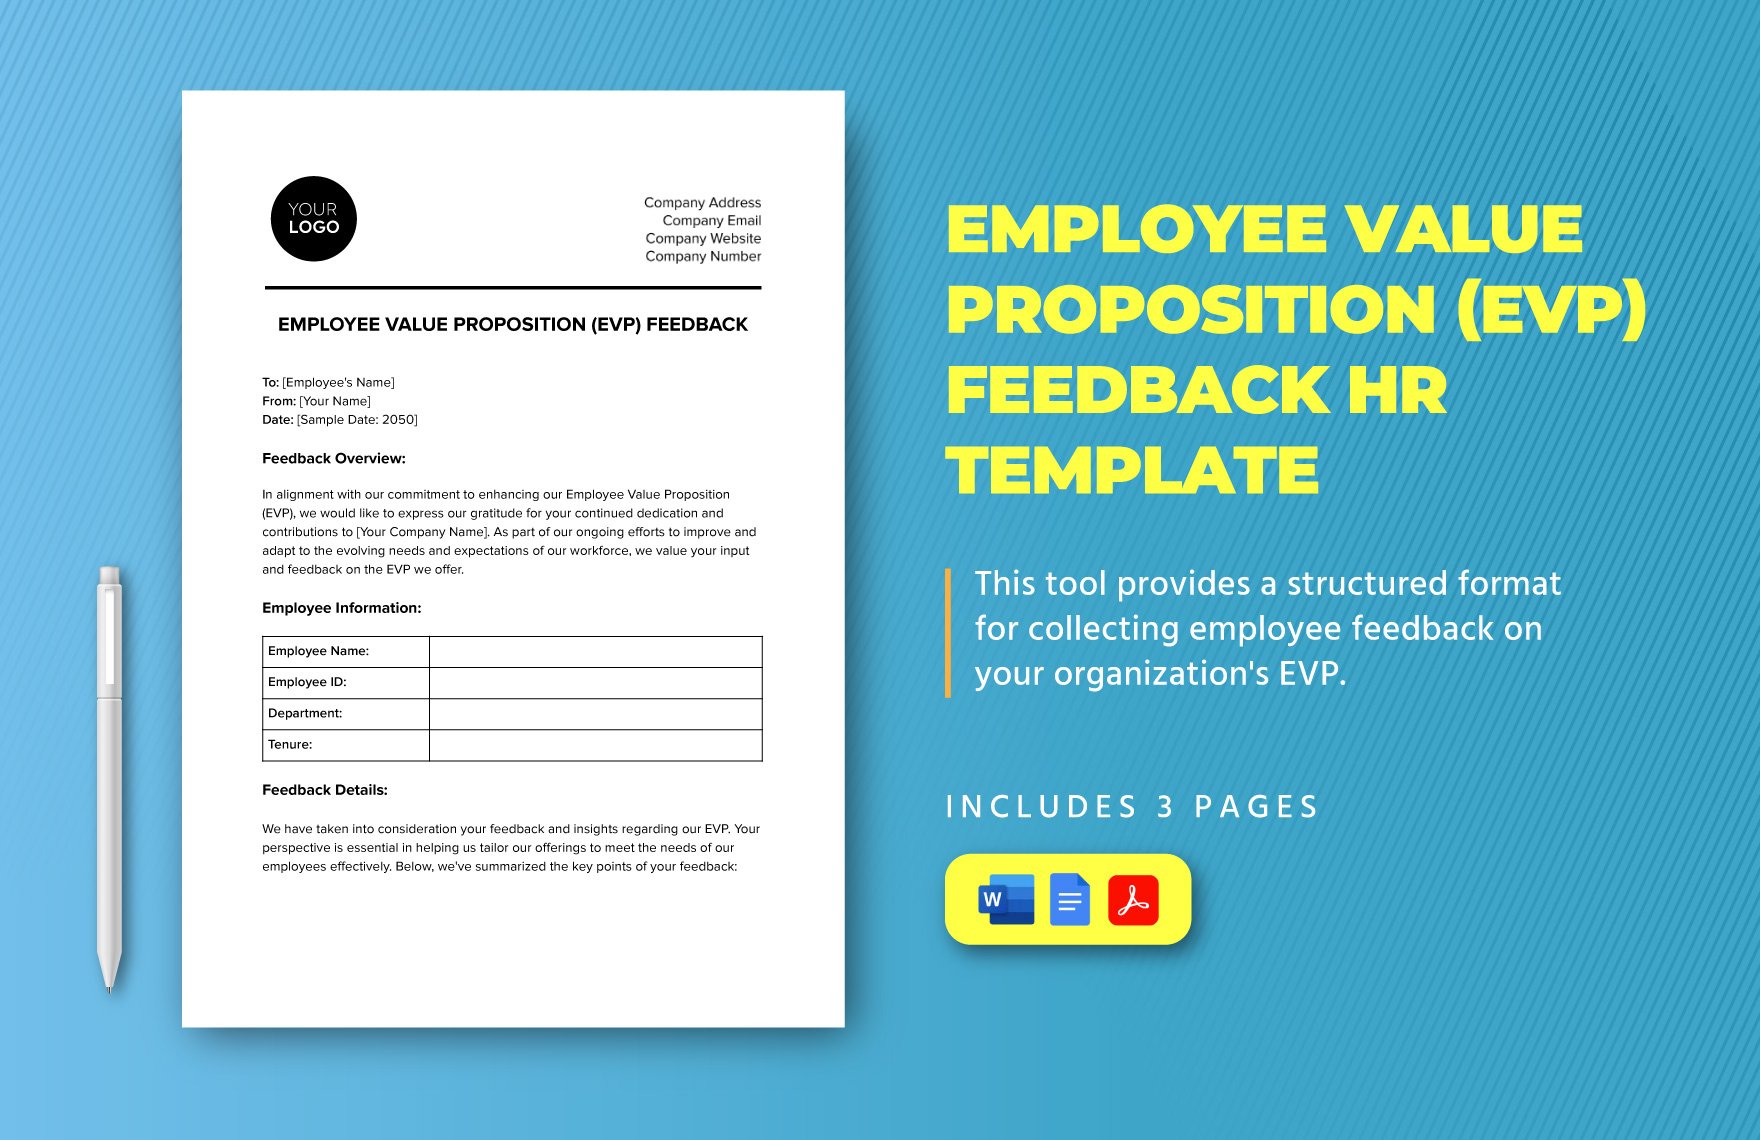 Employee Value Proposition (EVP) Feedback HR Template